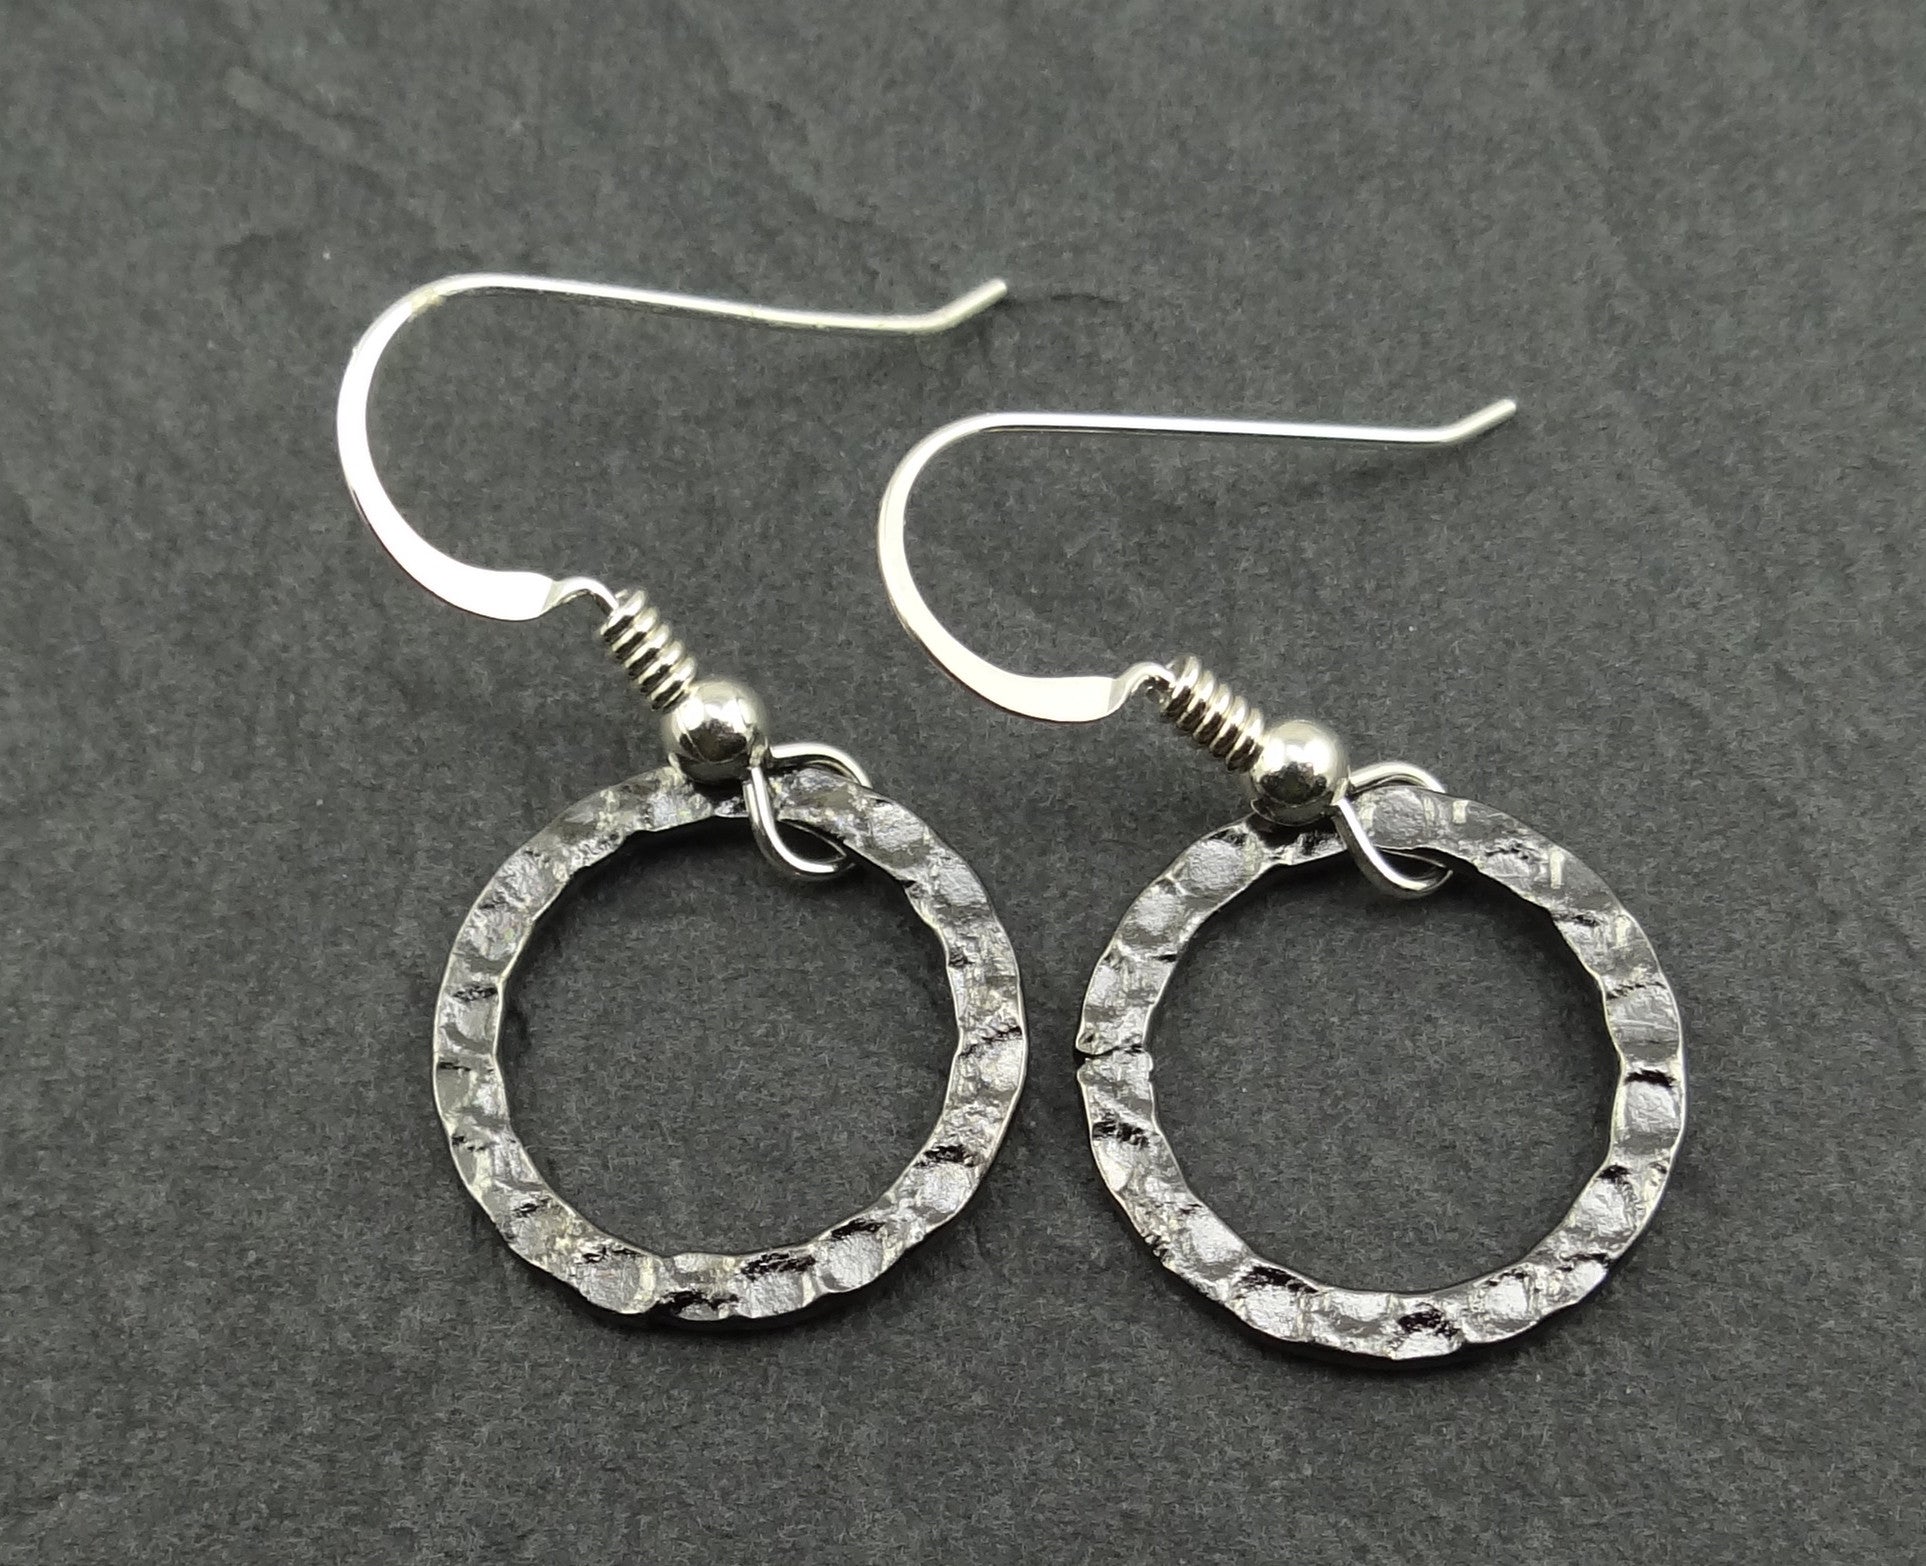 Simple Gunmetal-Finished Steel Ring Earrings